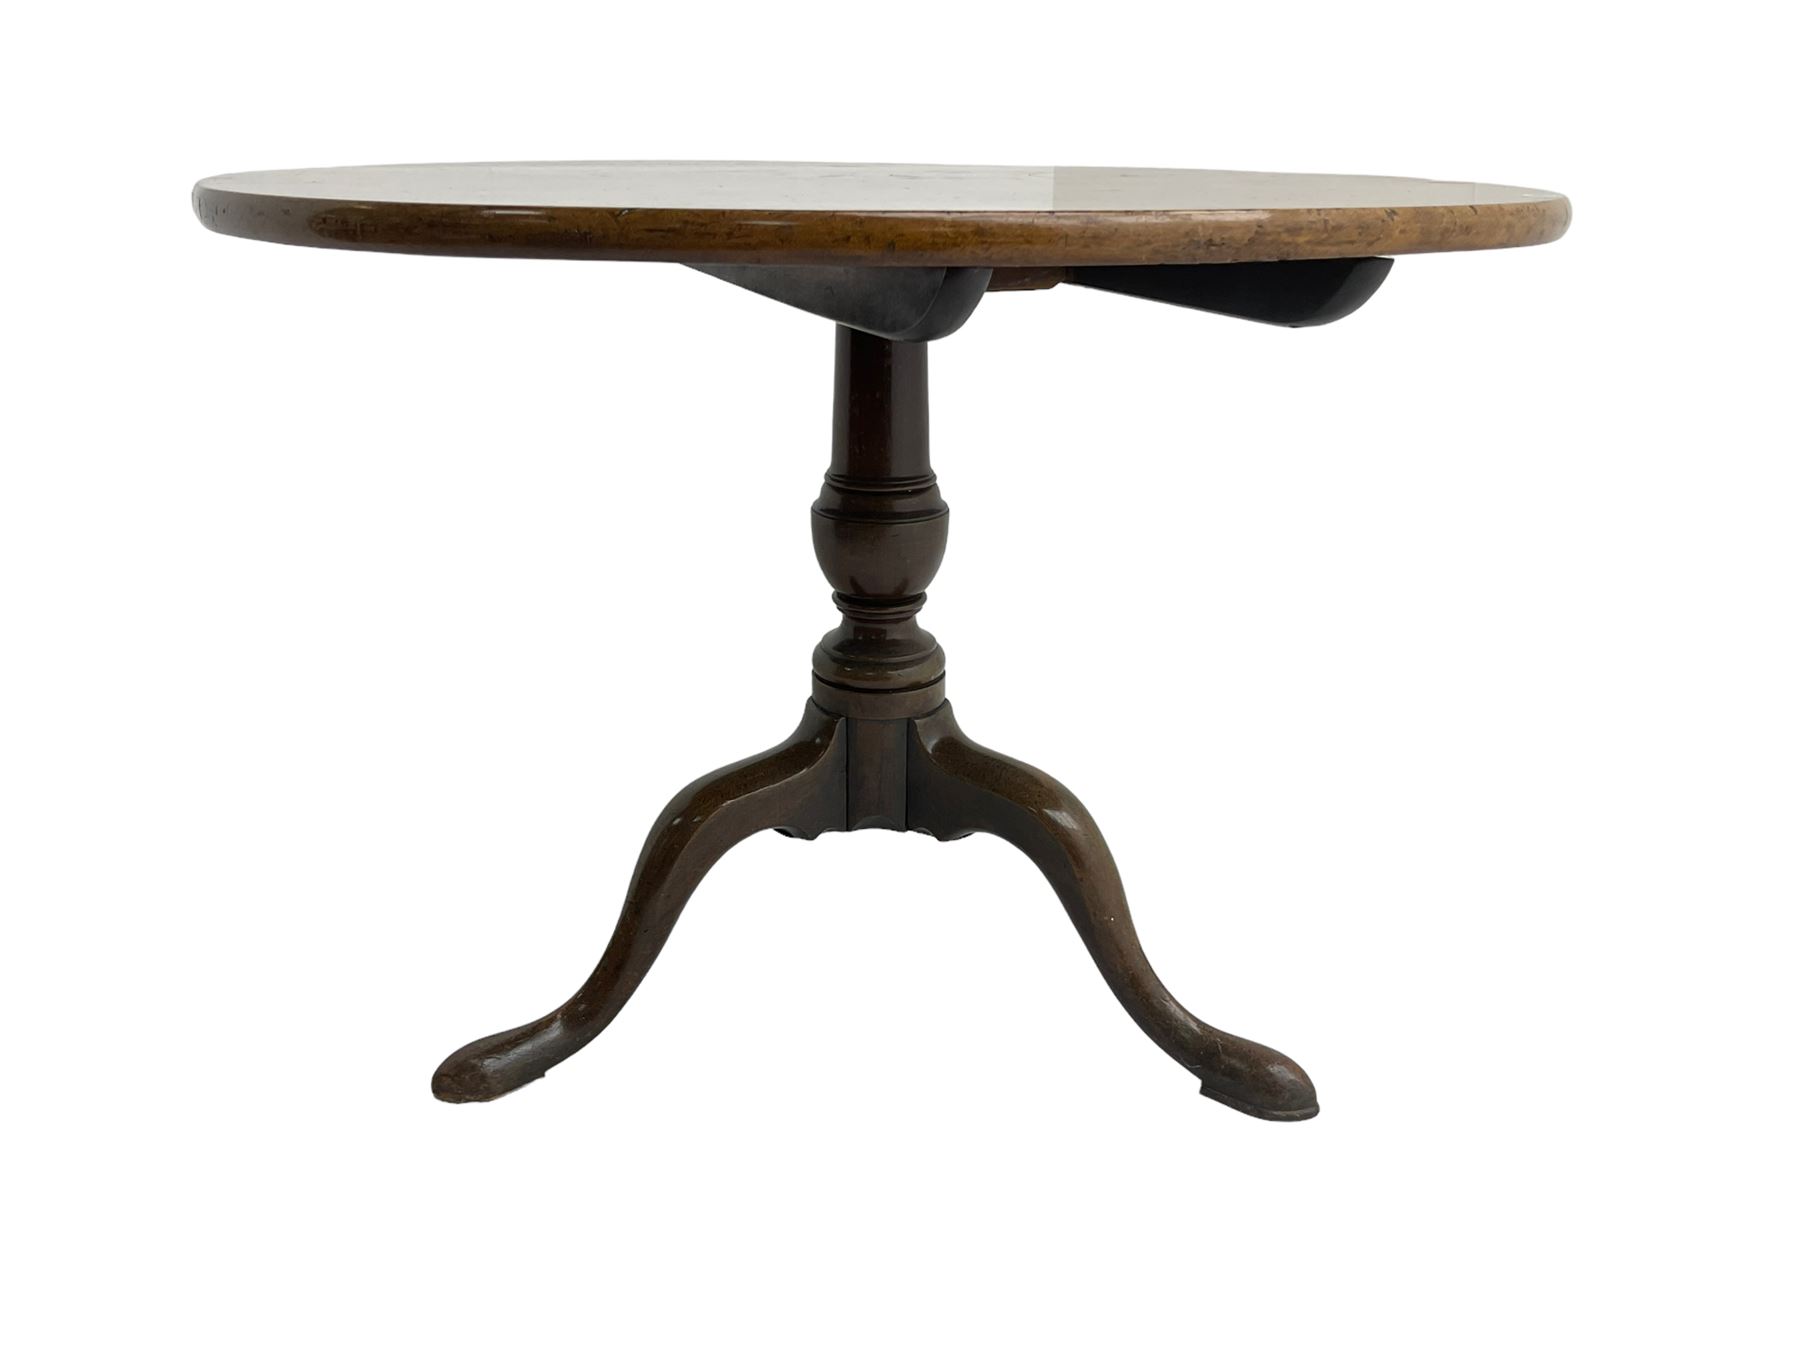 19th century mahogany pedestal table - Image 4 of 4